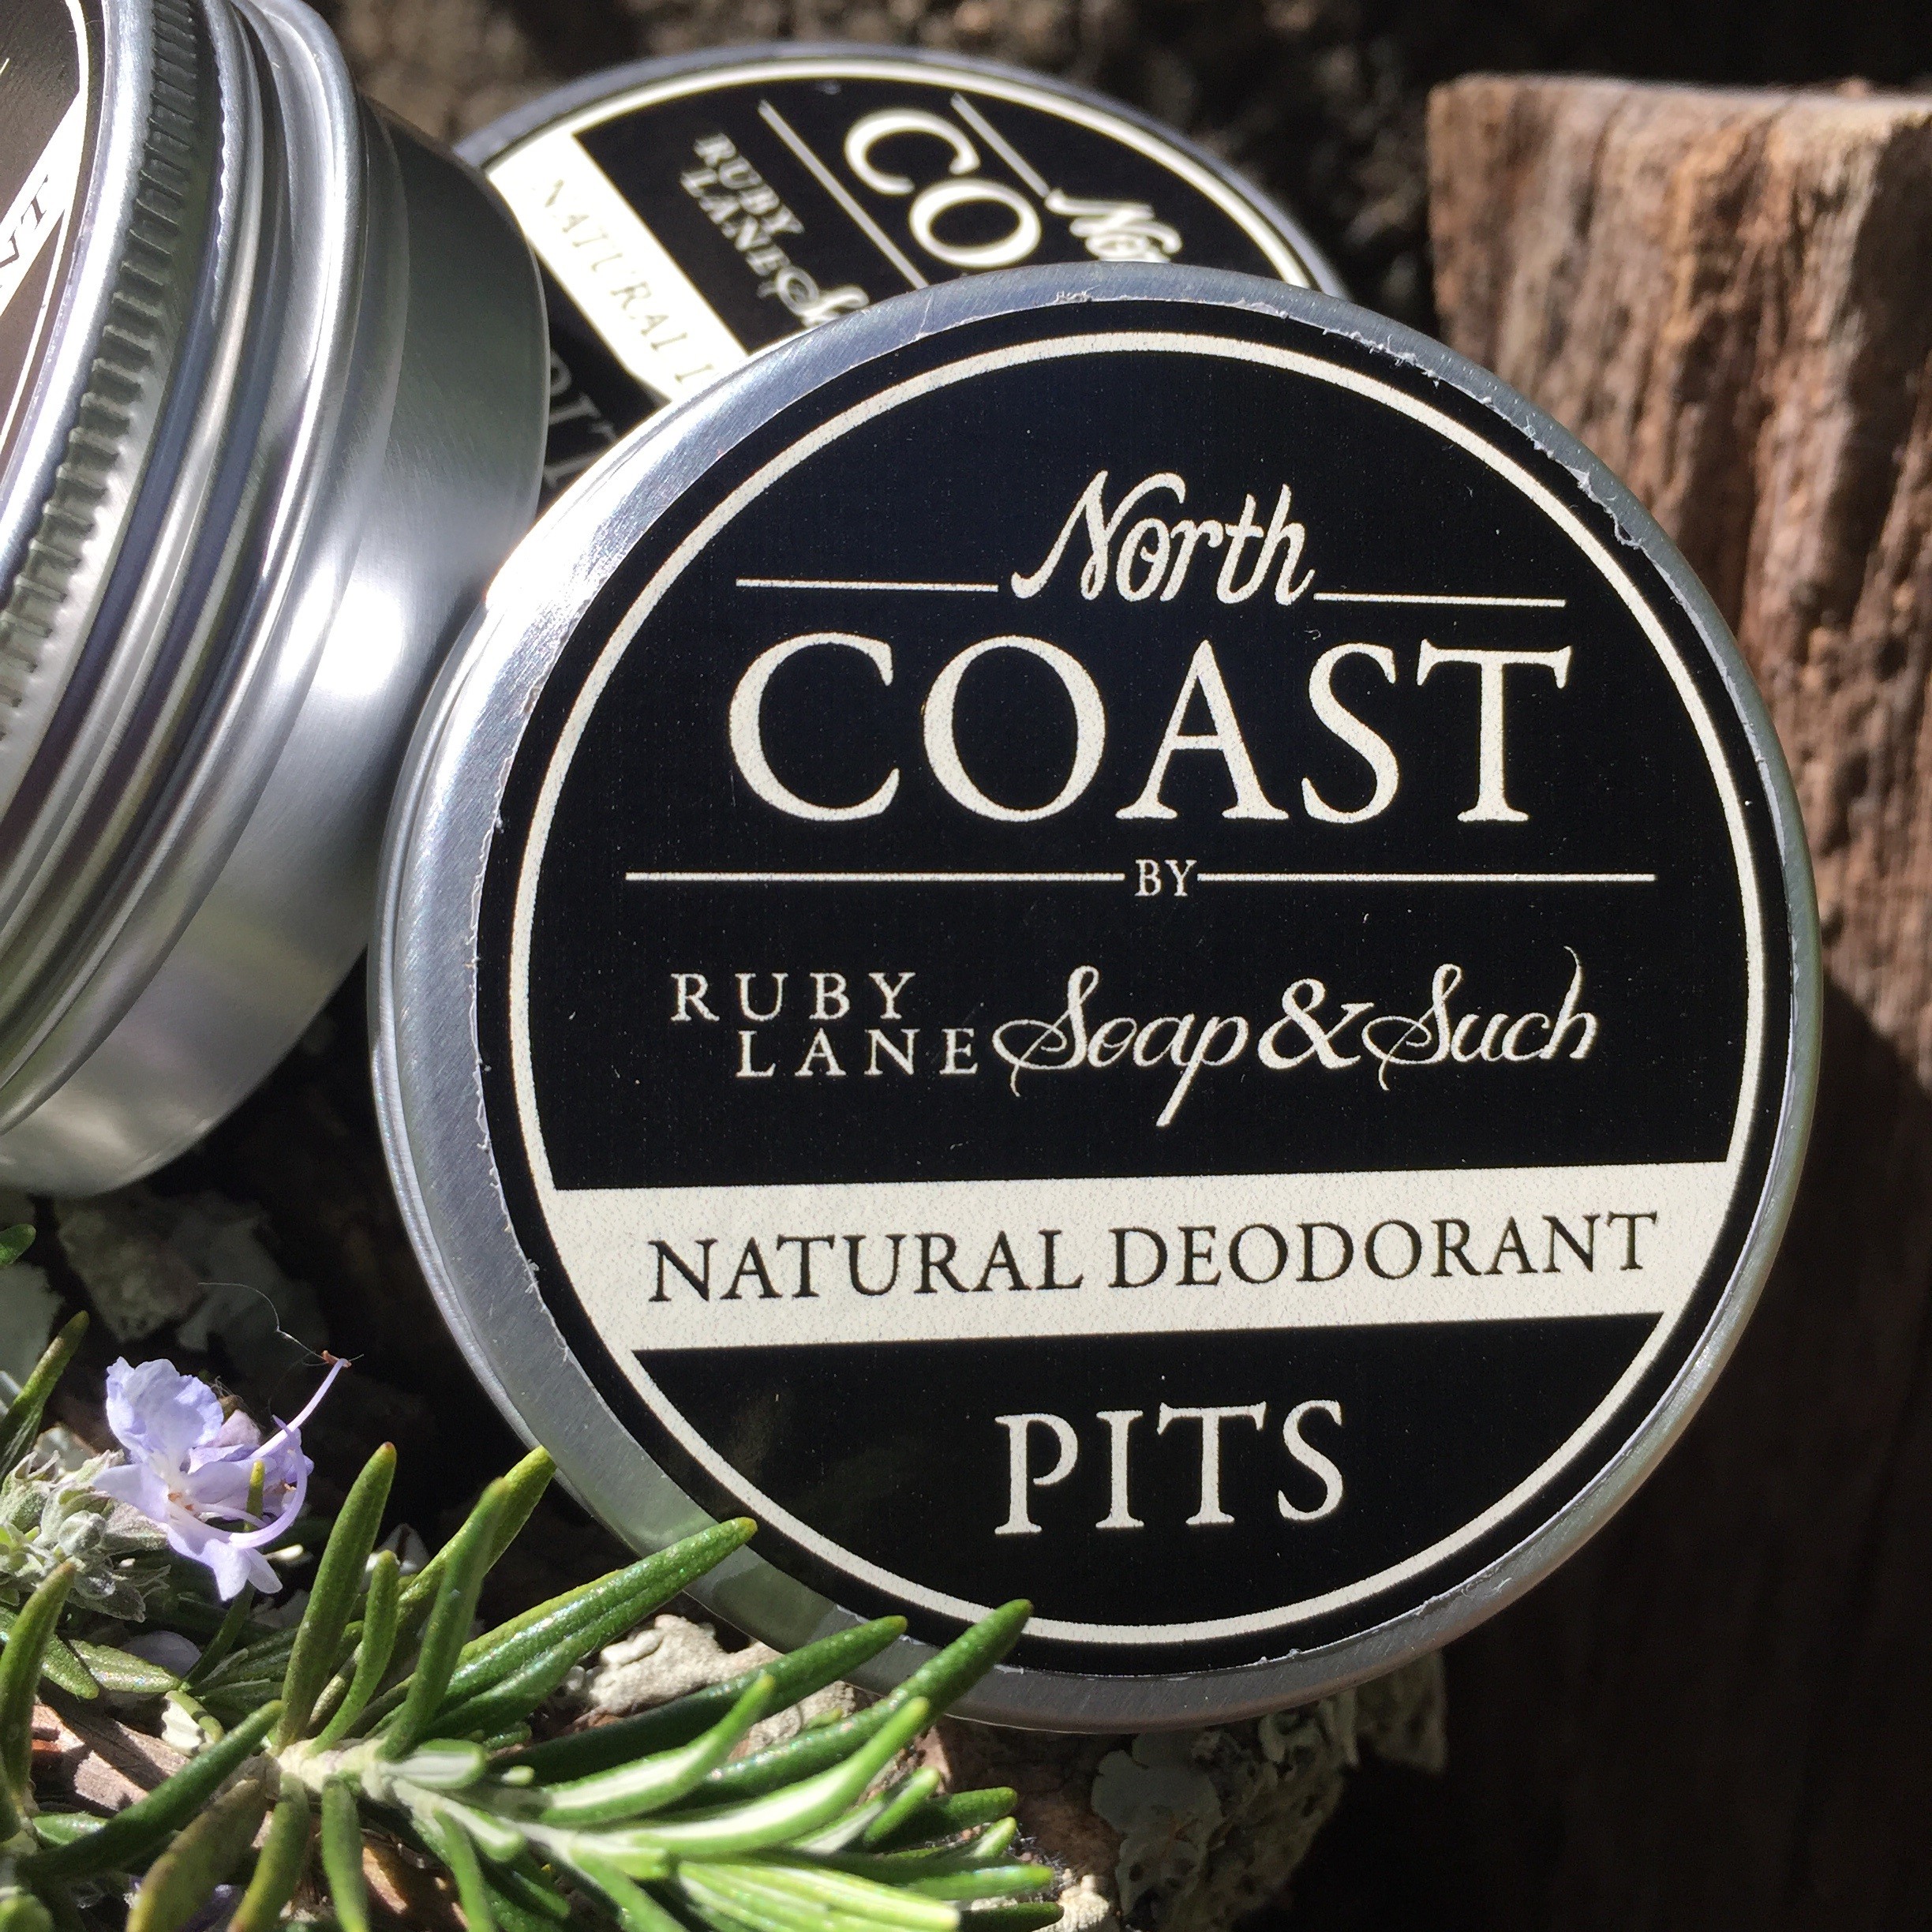 Natural Deodorant -" PITS"